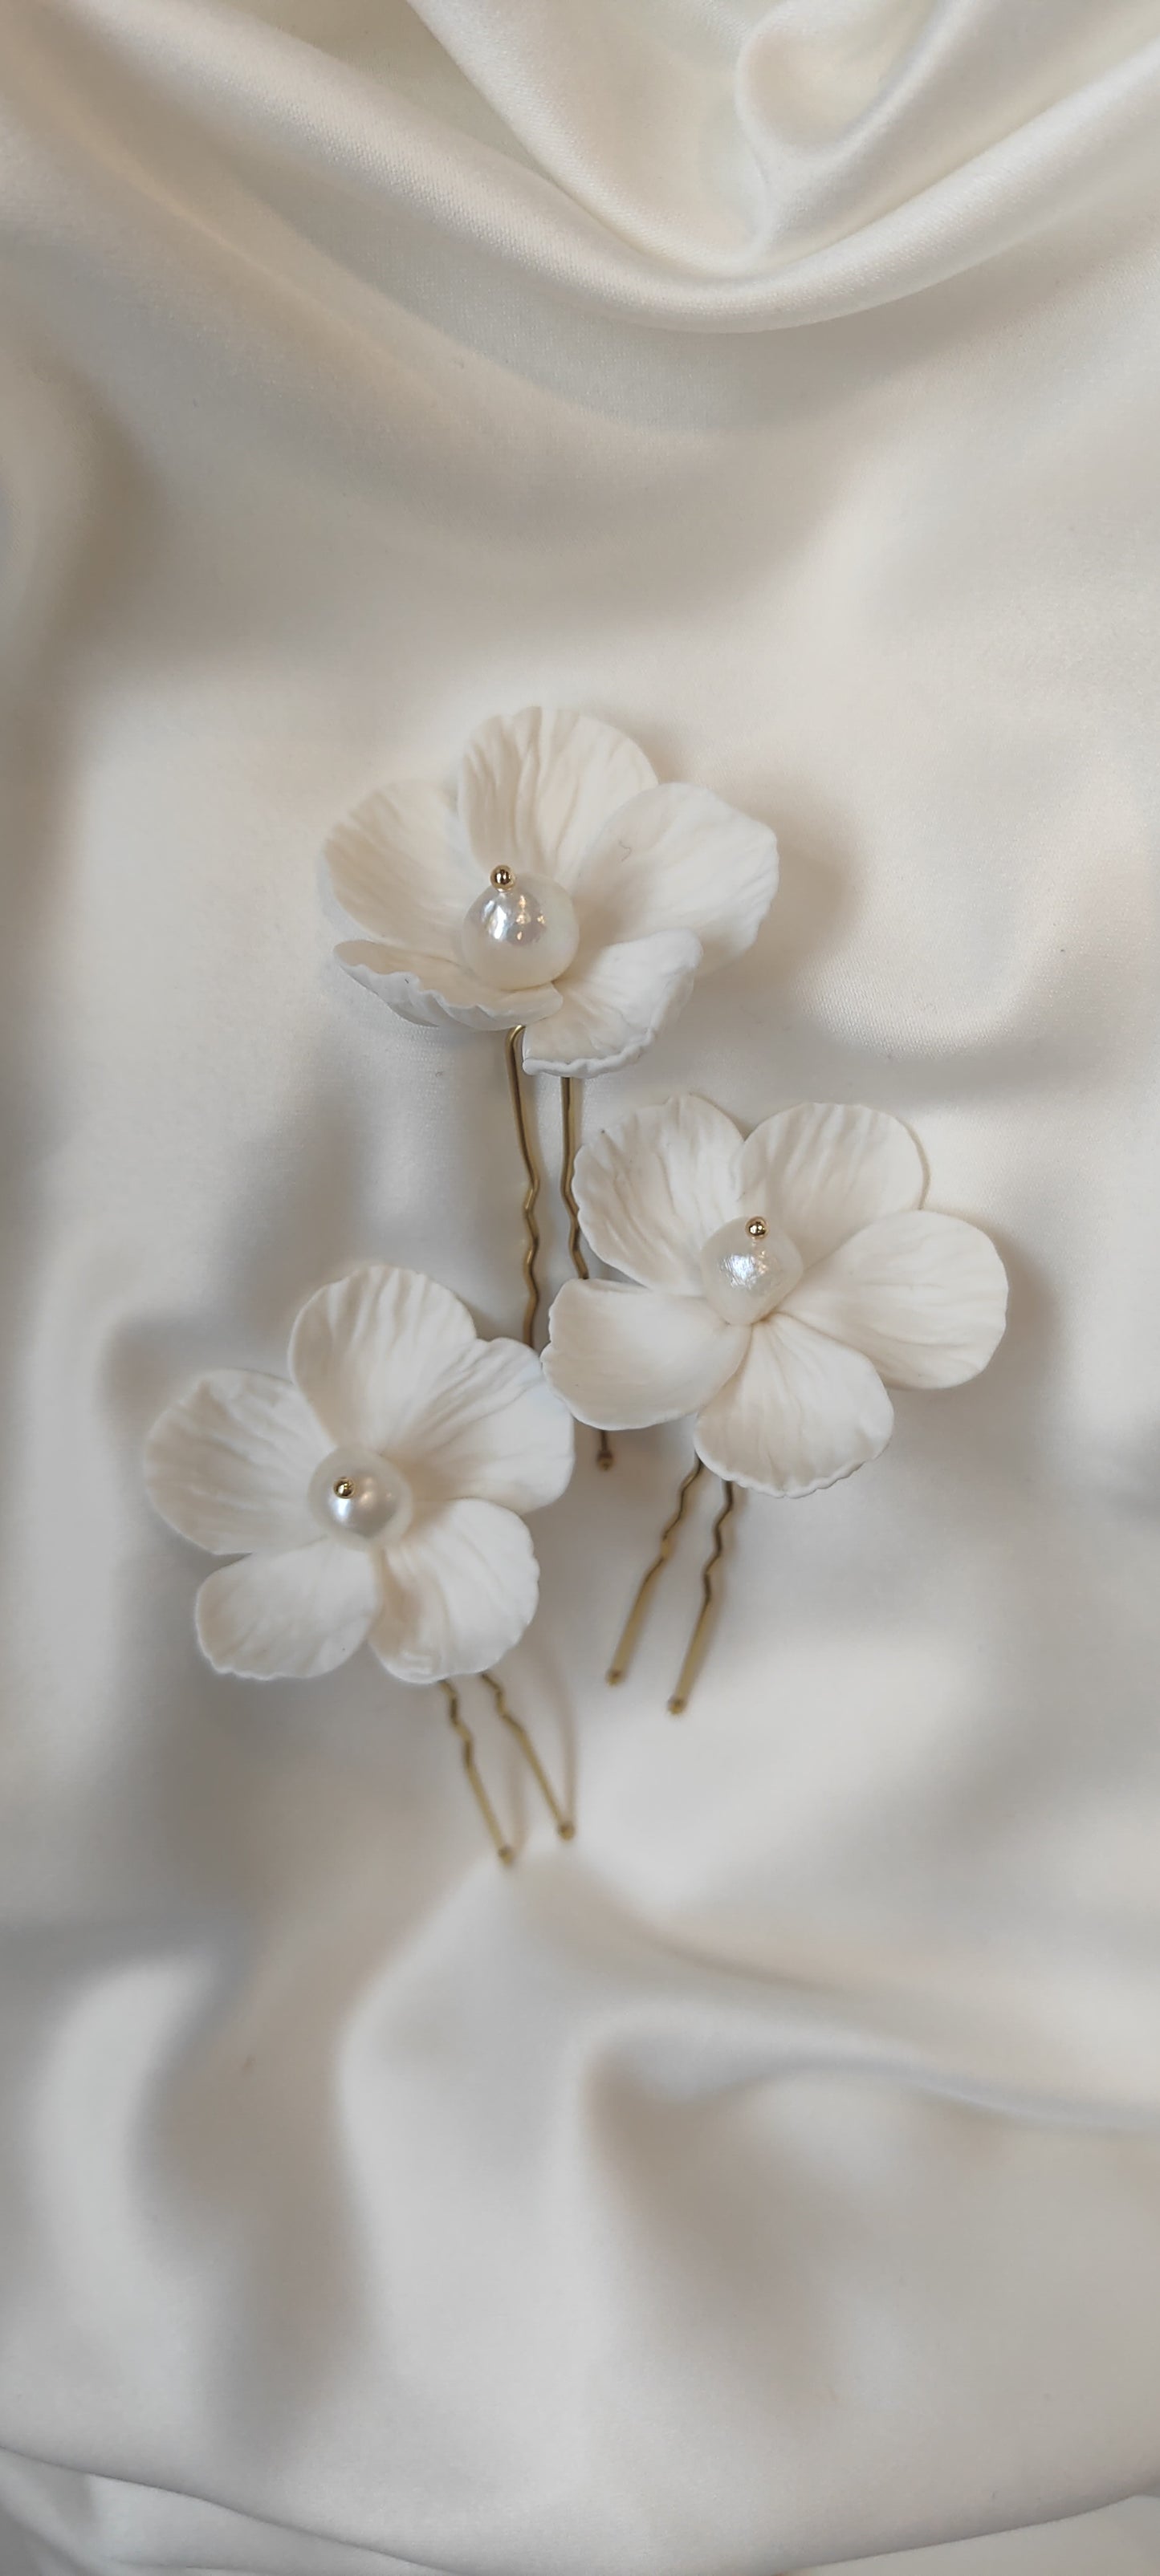 BLANCHE Pins- Floral Bridal Hair Accessory